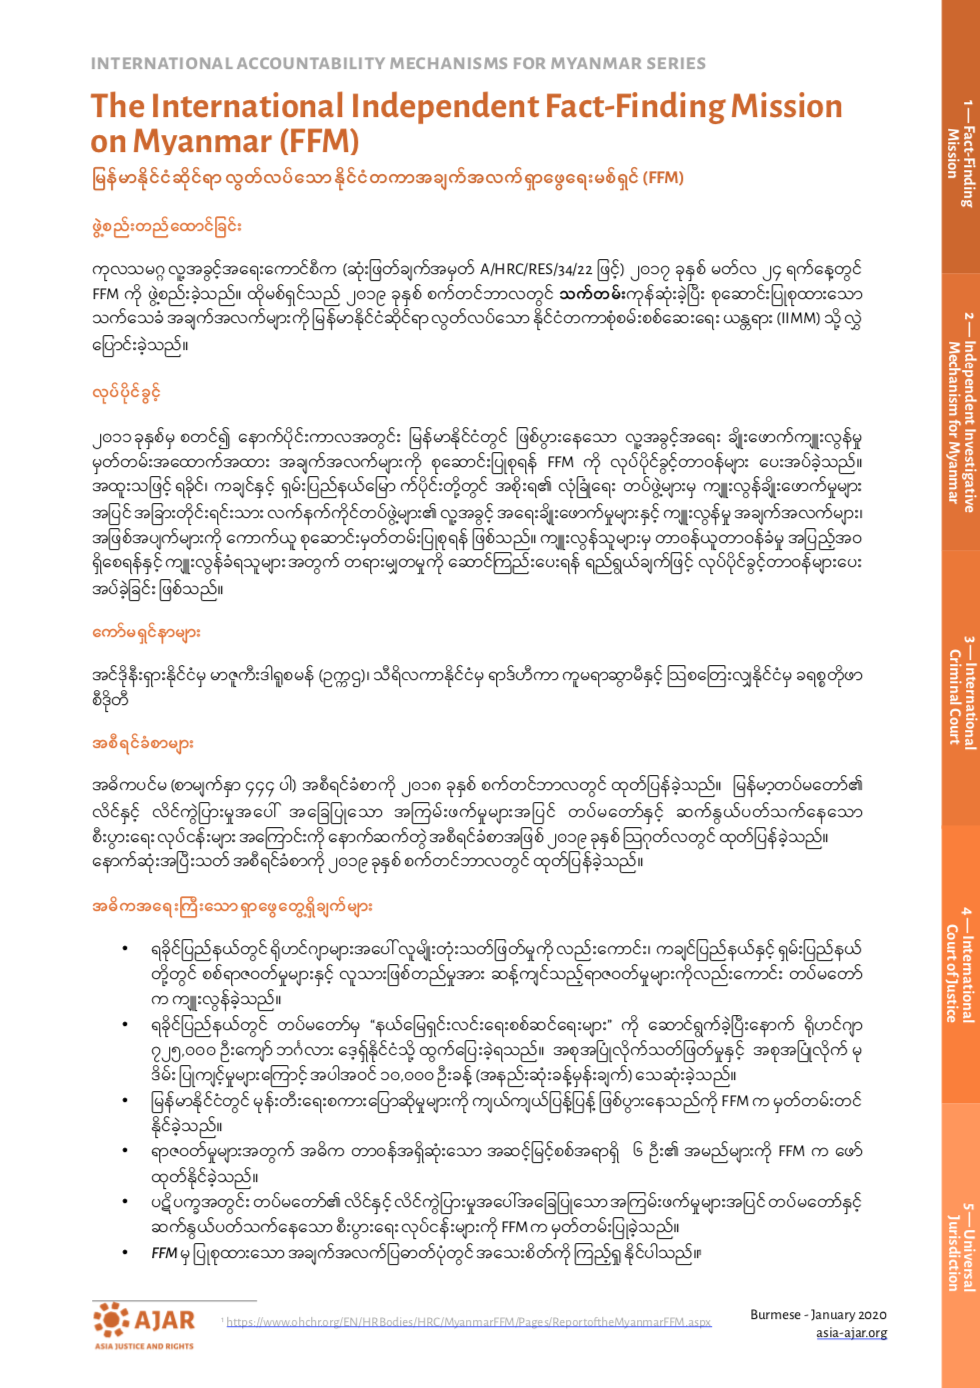 AJAR International Accountability Mechanisms for Myanmar Series Available in English, Burmese, Bangla, and Karen language